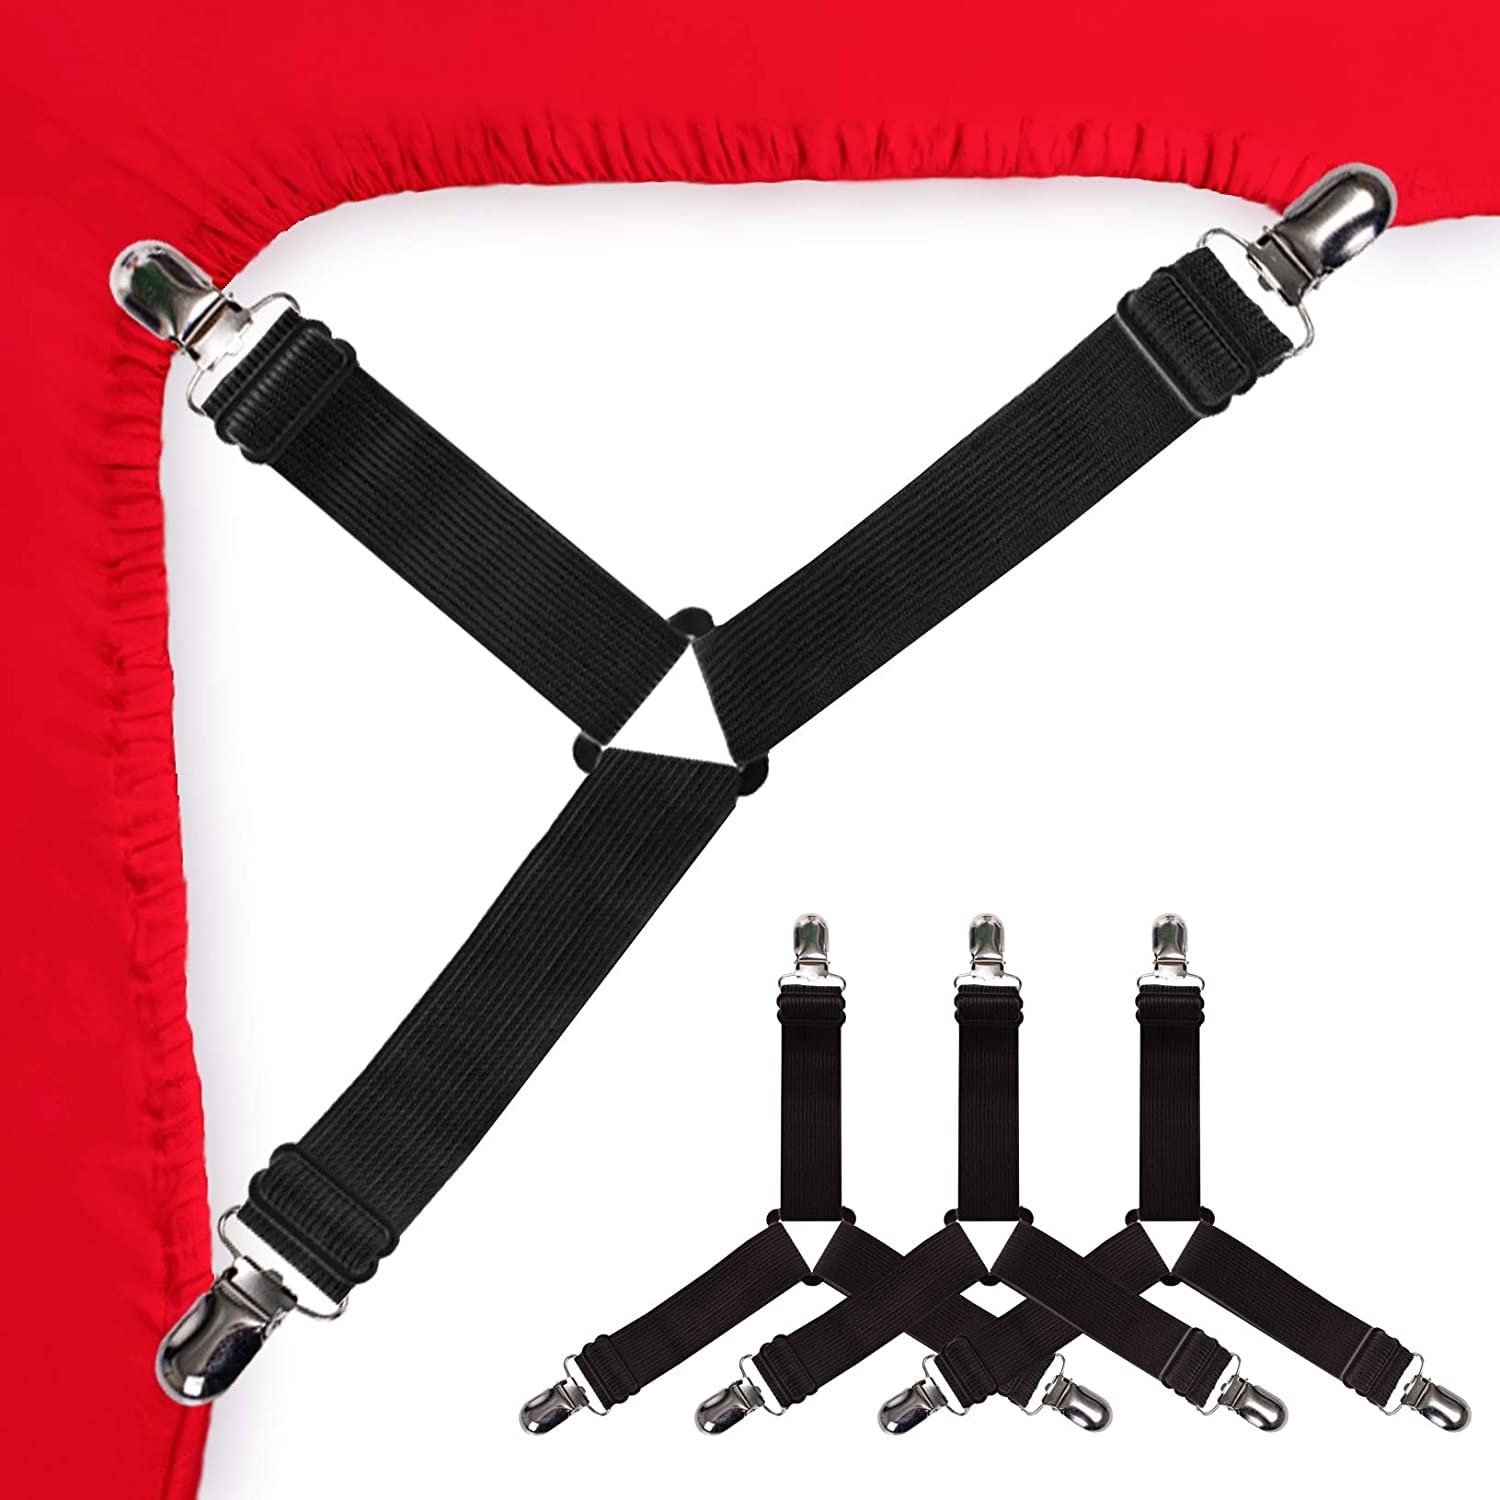 Global Bargains Bed Sheet Holder Grippers Straps Suspenders Elastic Fasteners Garter 4 Pcs